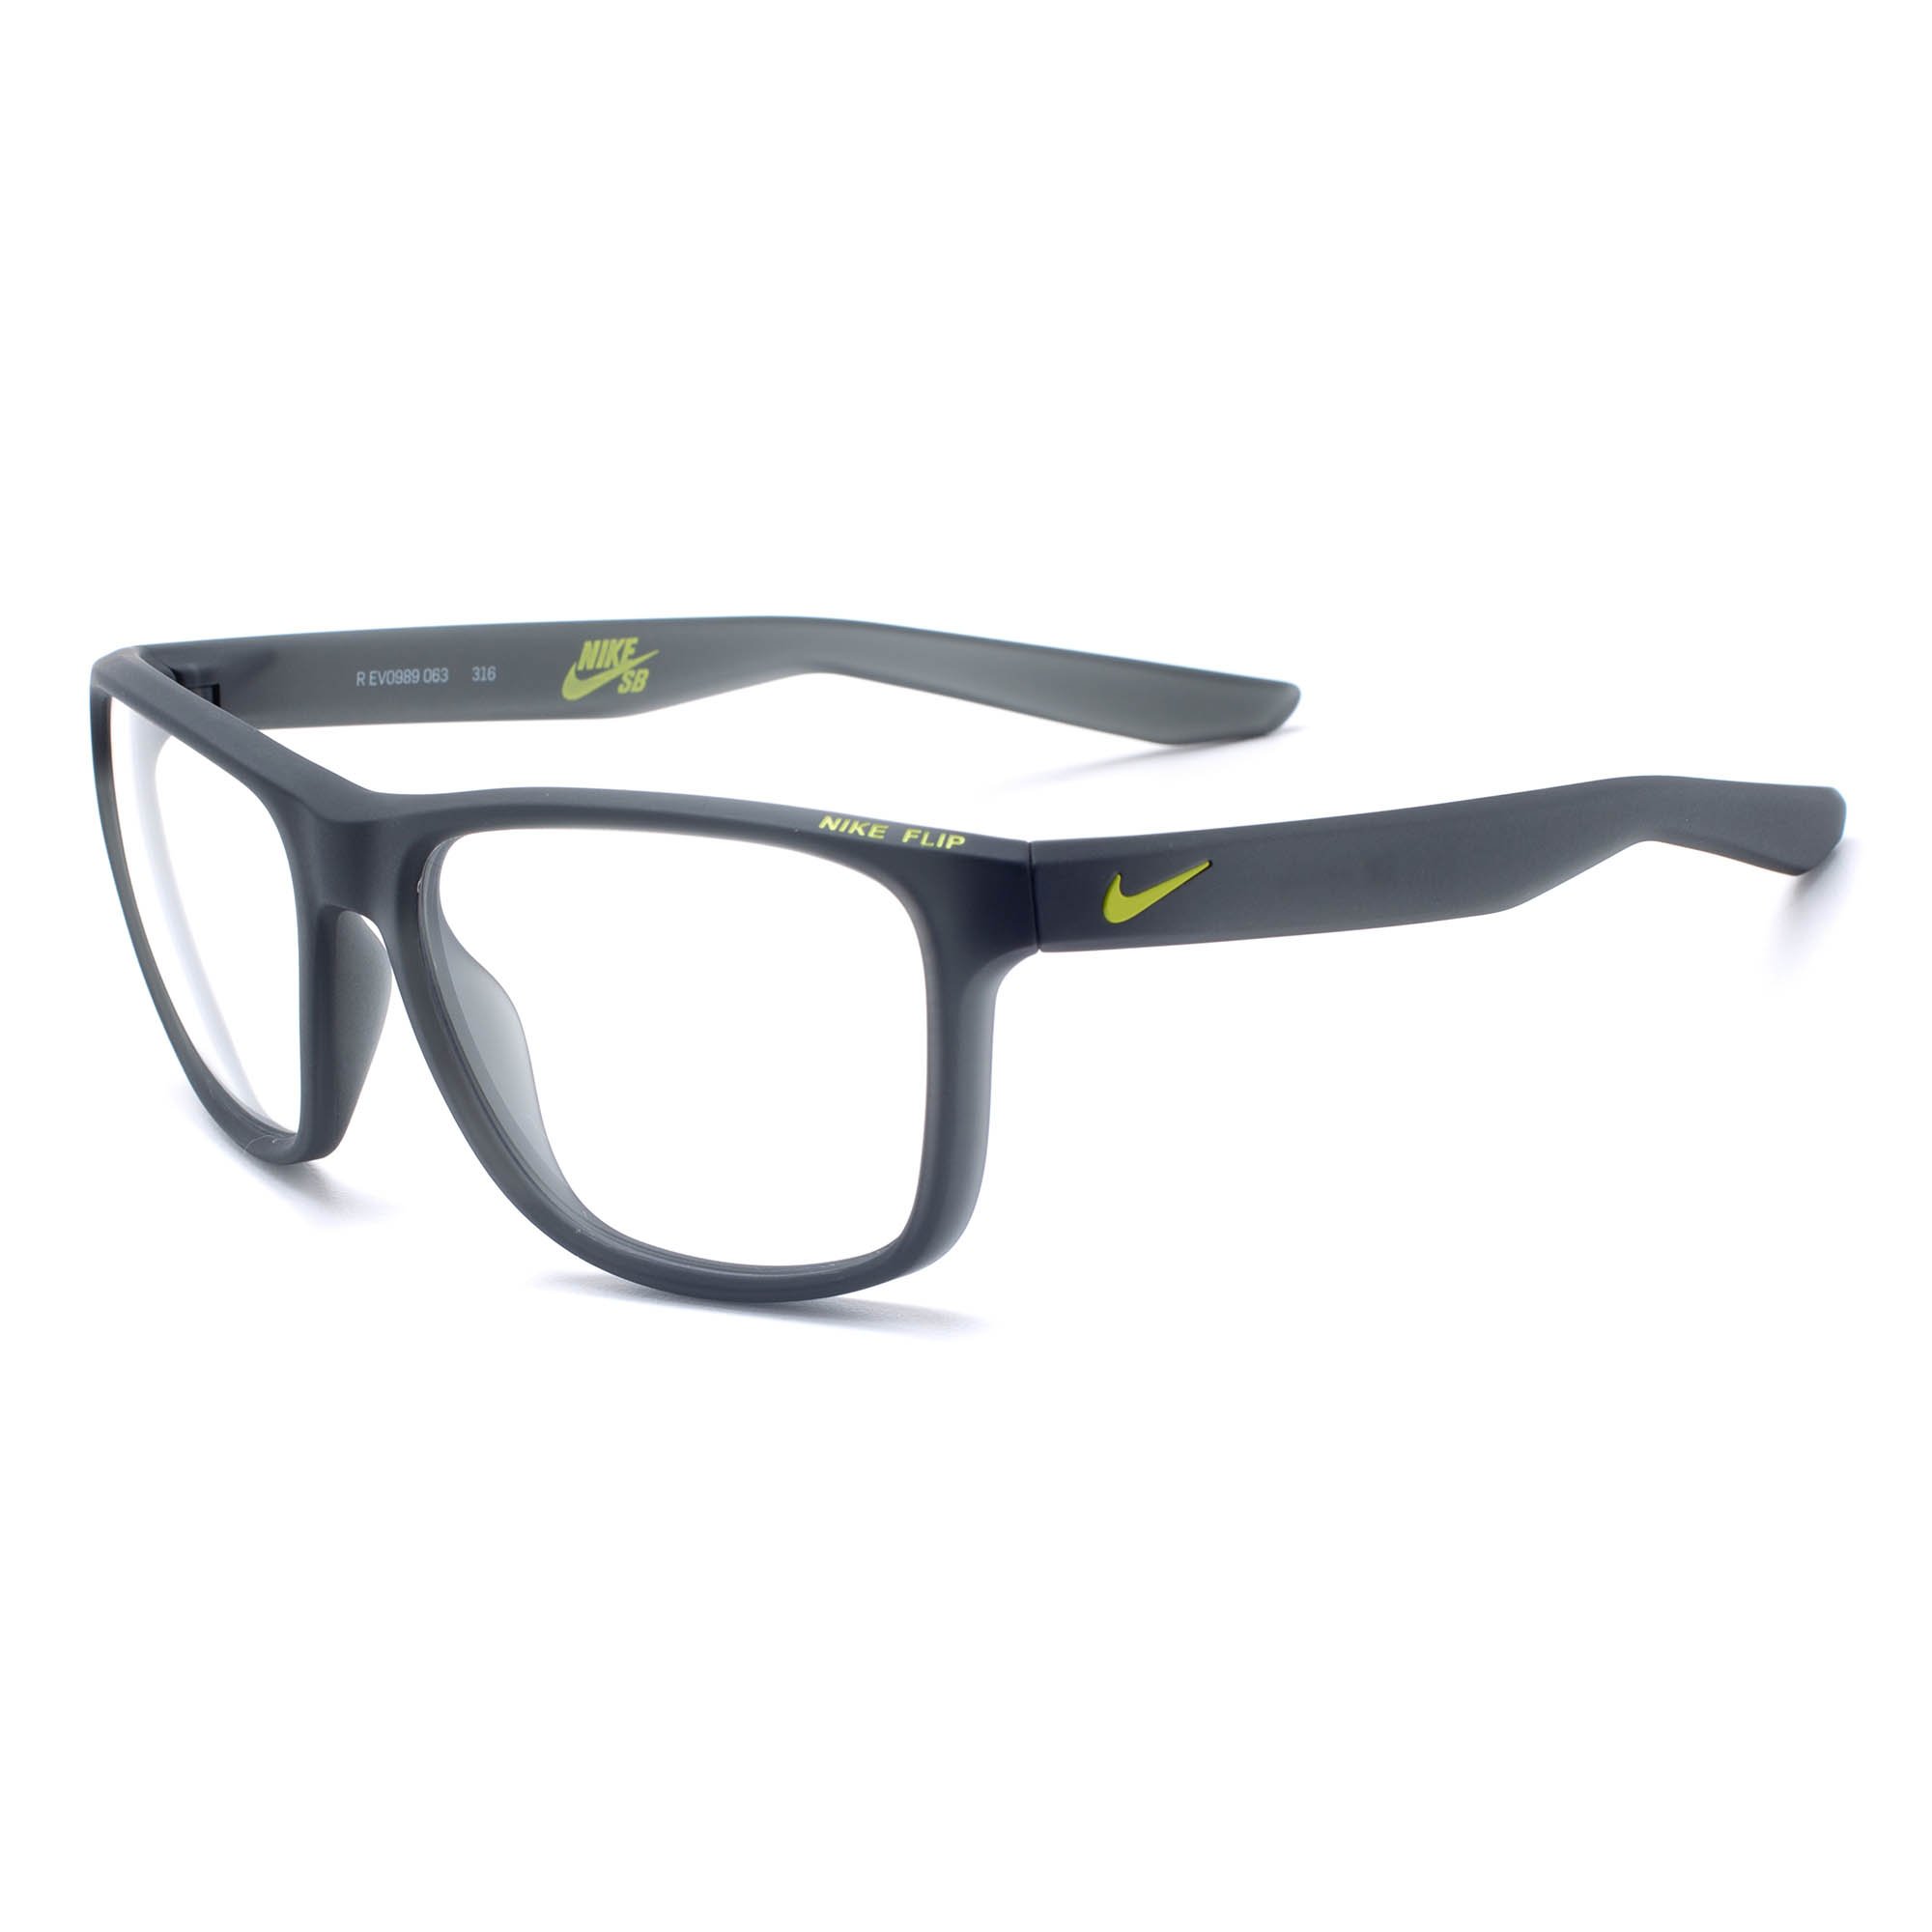 RG-NIKE-FLIP Nike Flip Radiation Glasses